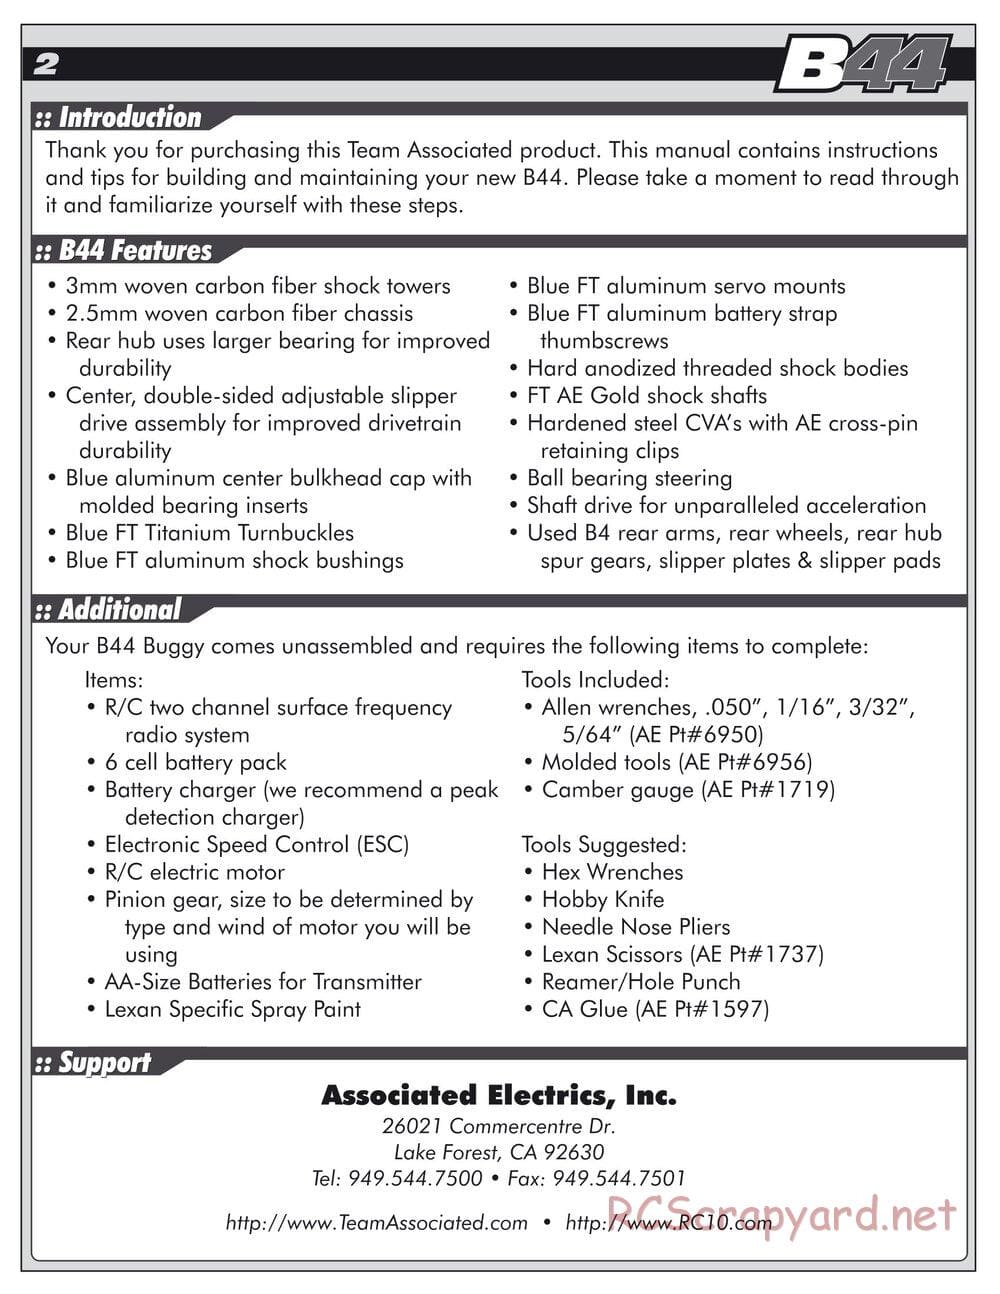 Team Associated - B44 Factory Team - Manual - Page 2